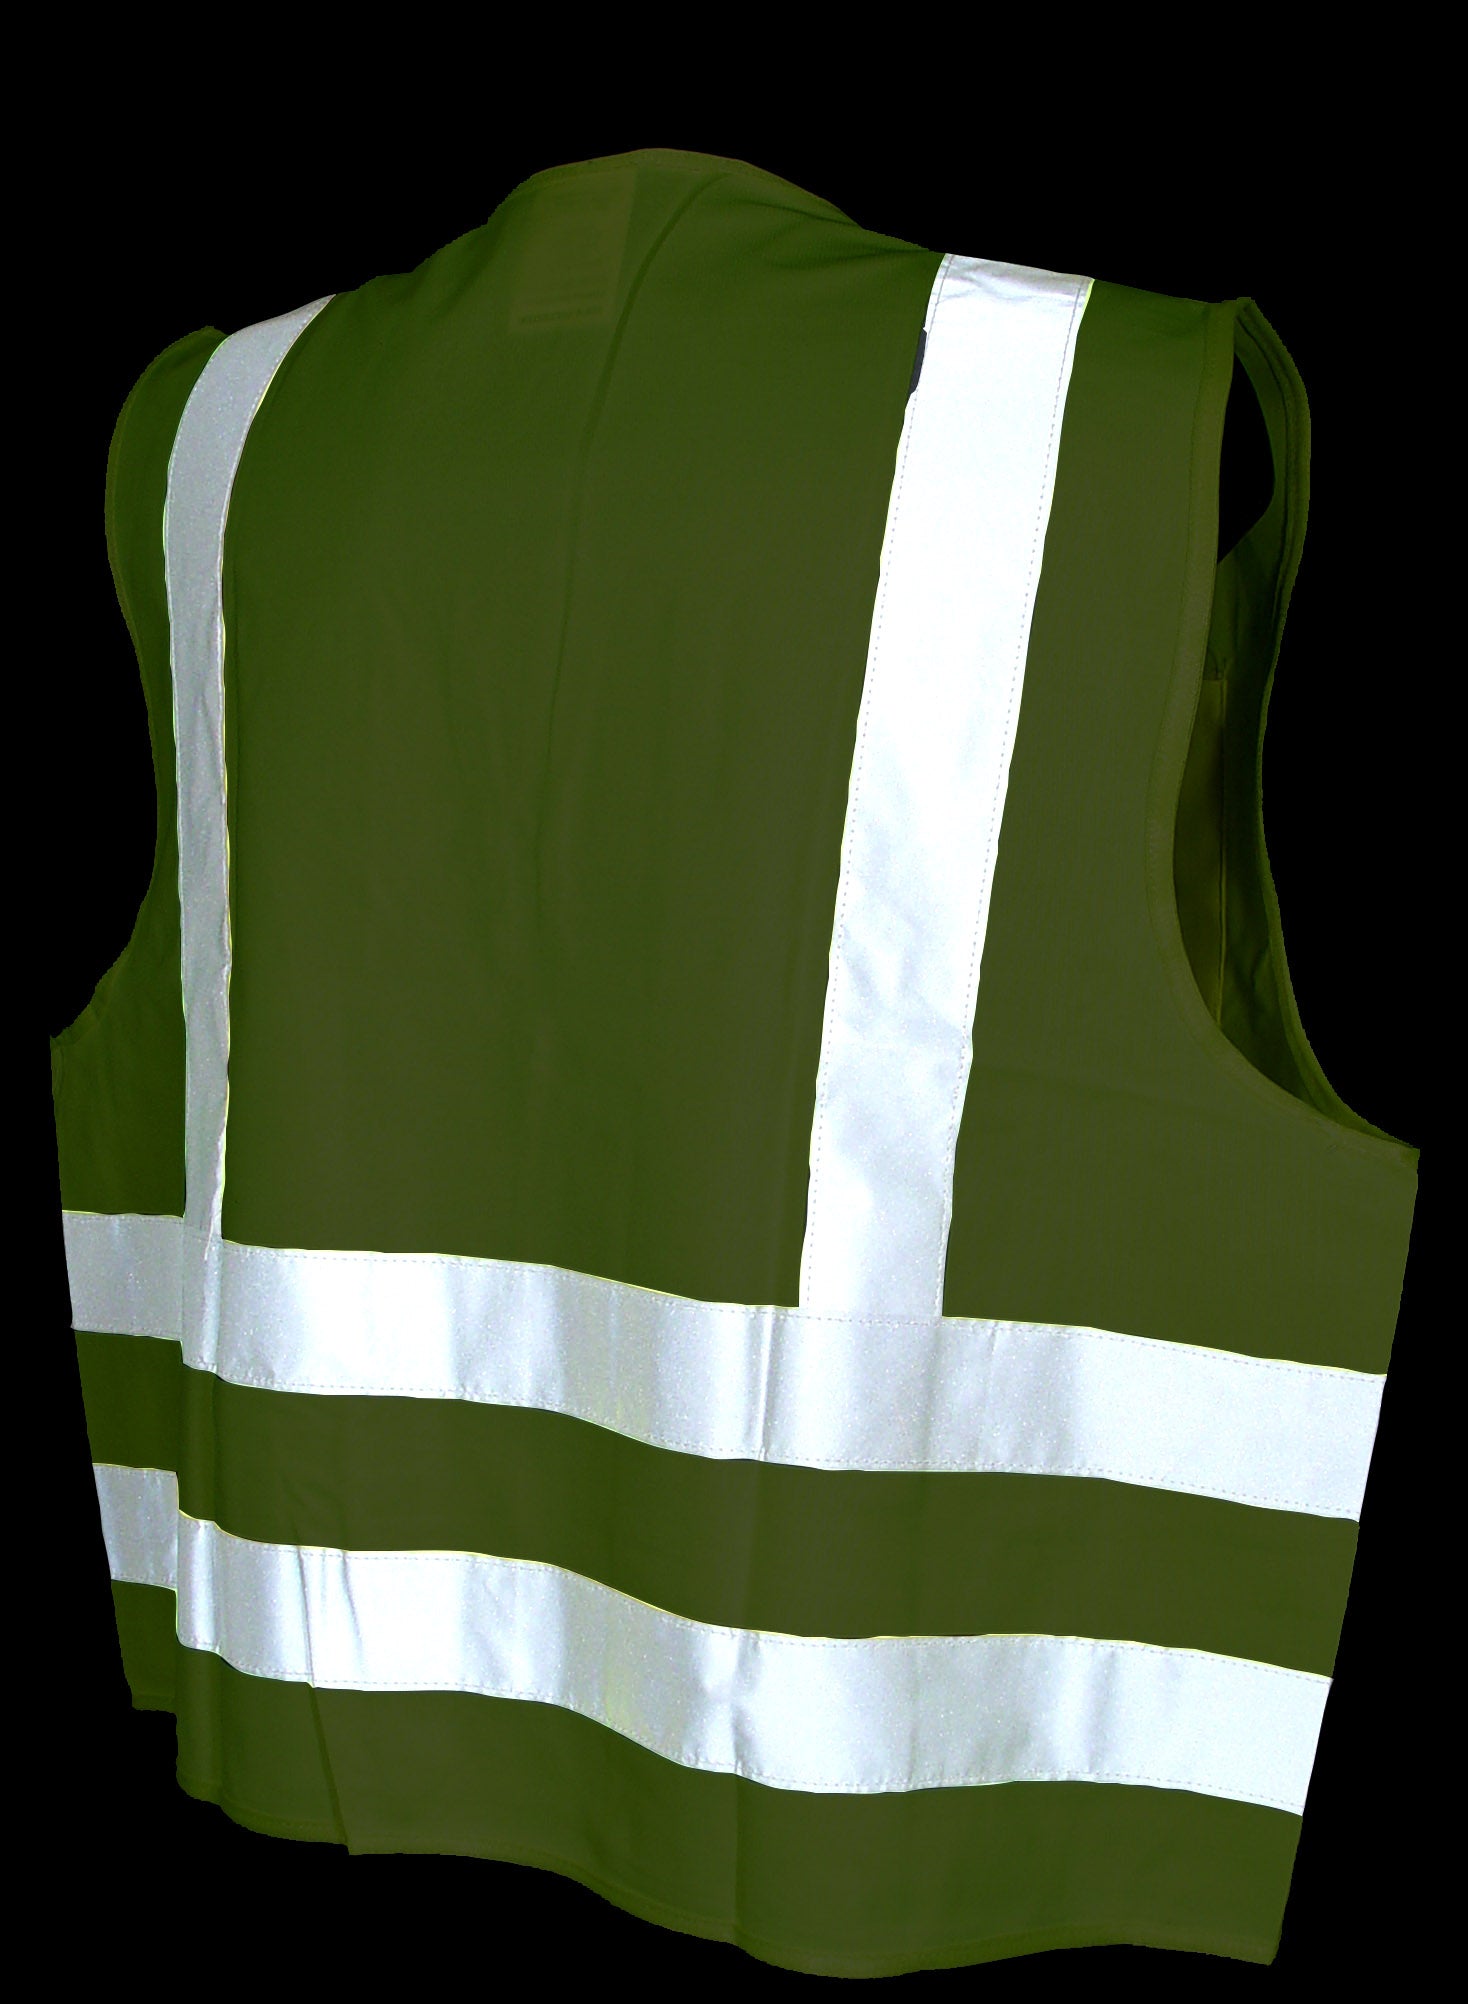 Radians SV8 Standard Type R Class 2 Solid Safety Vest